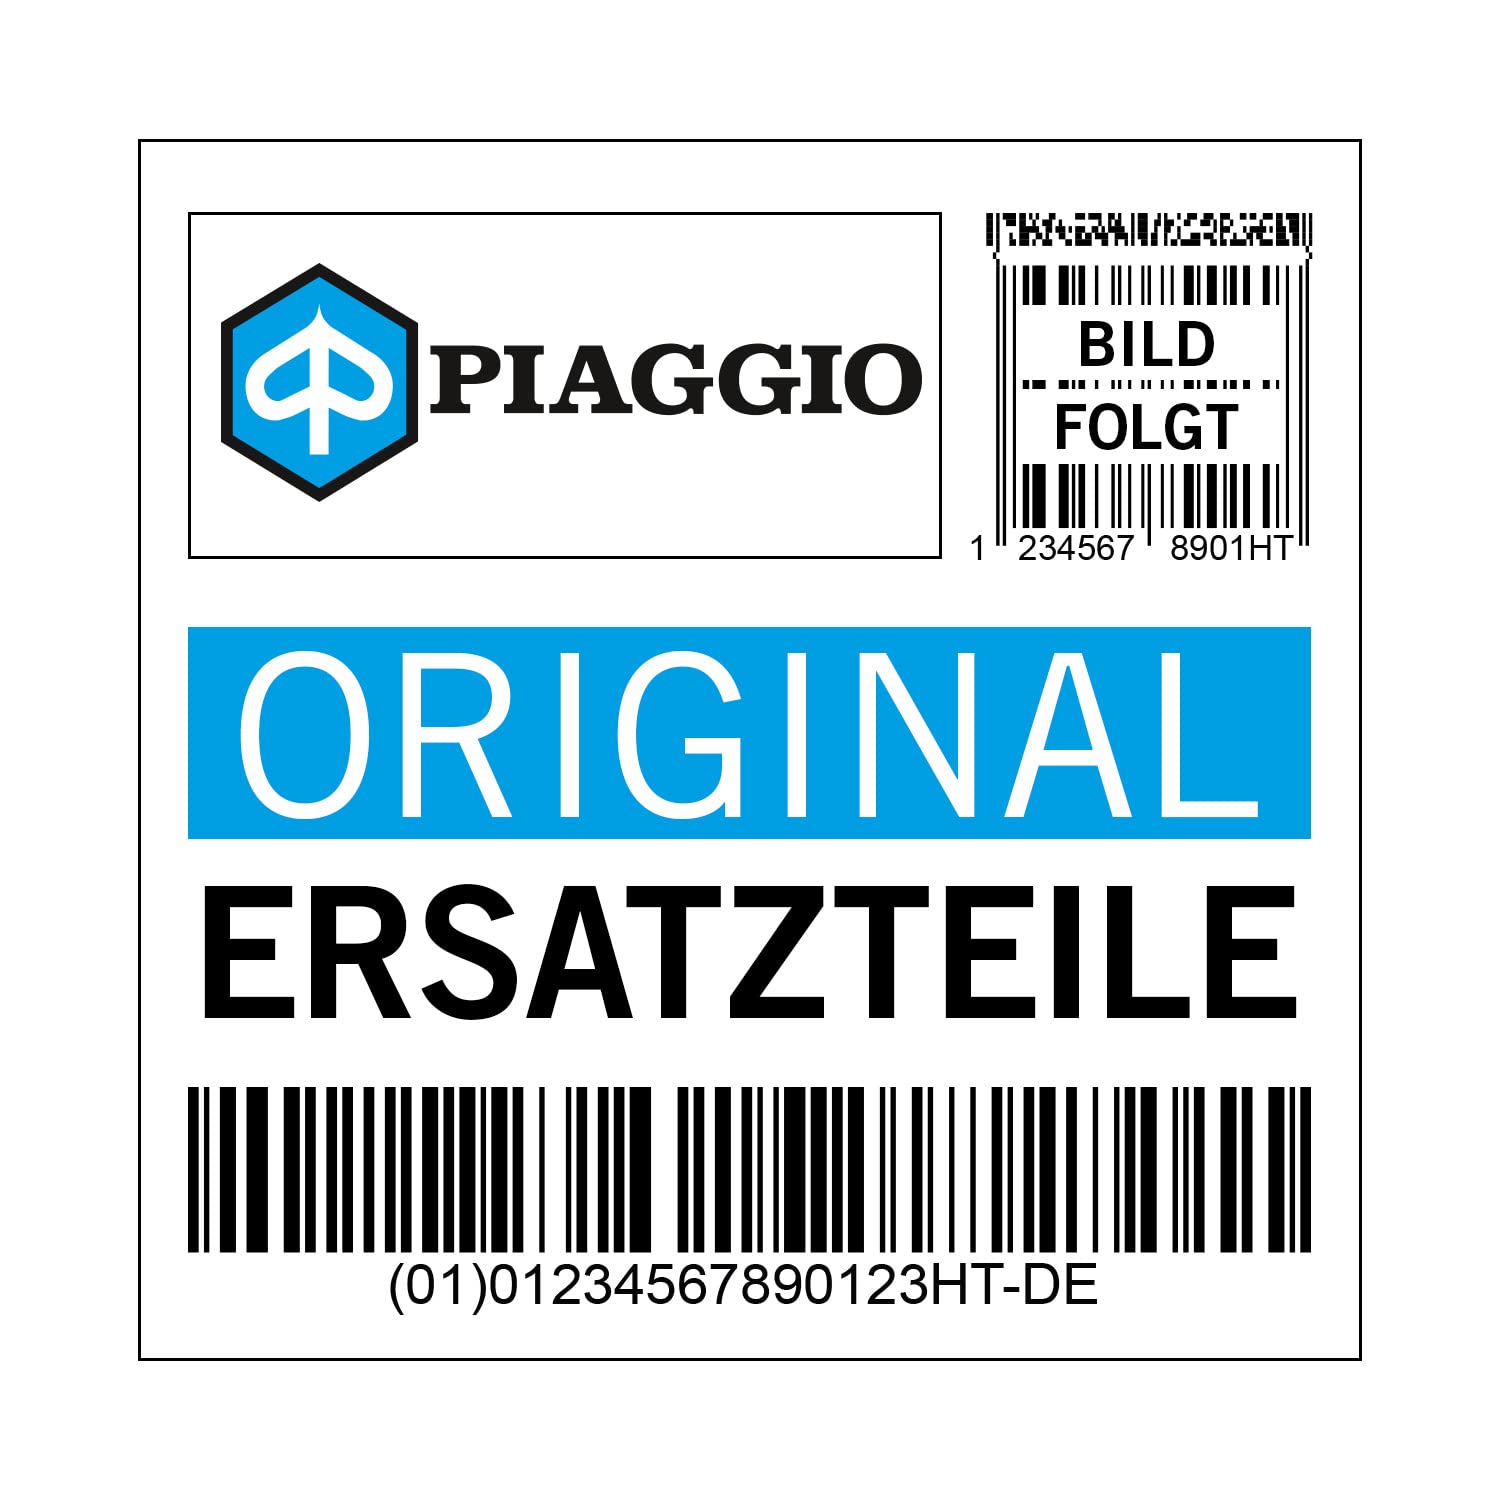 Hallgeber ABS Piaggio, Phonic wheel, 2B003169 von Maxtuned